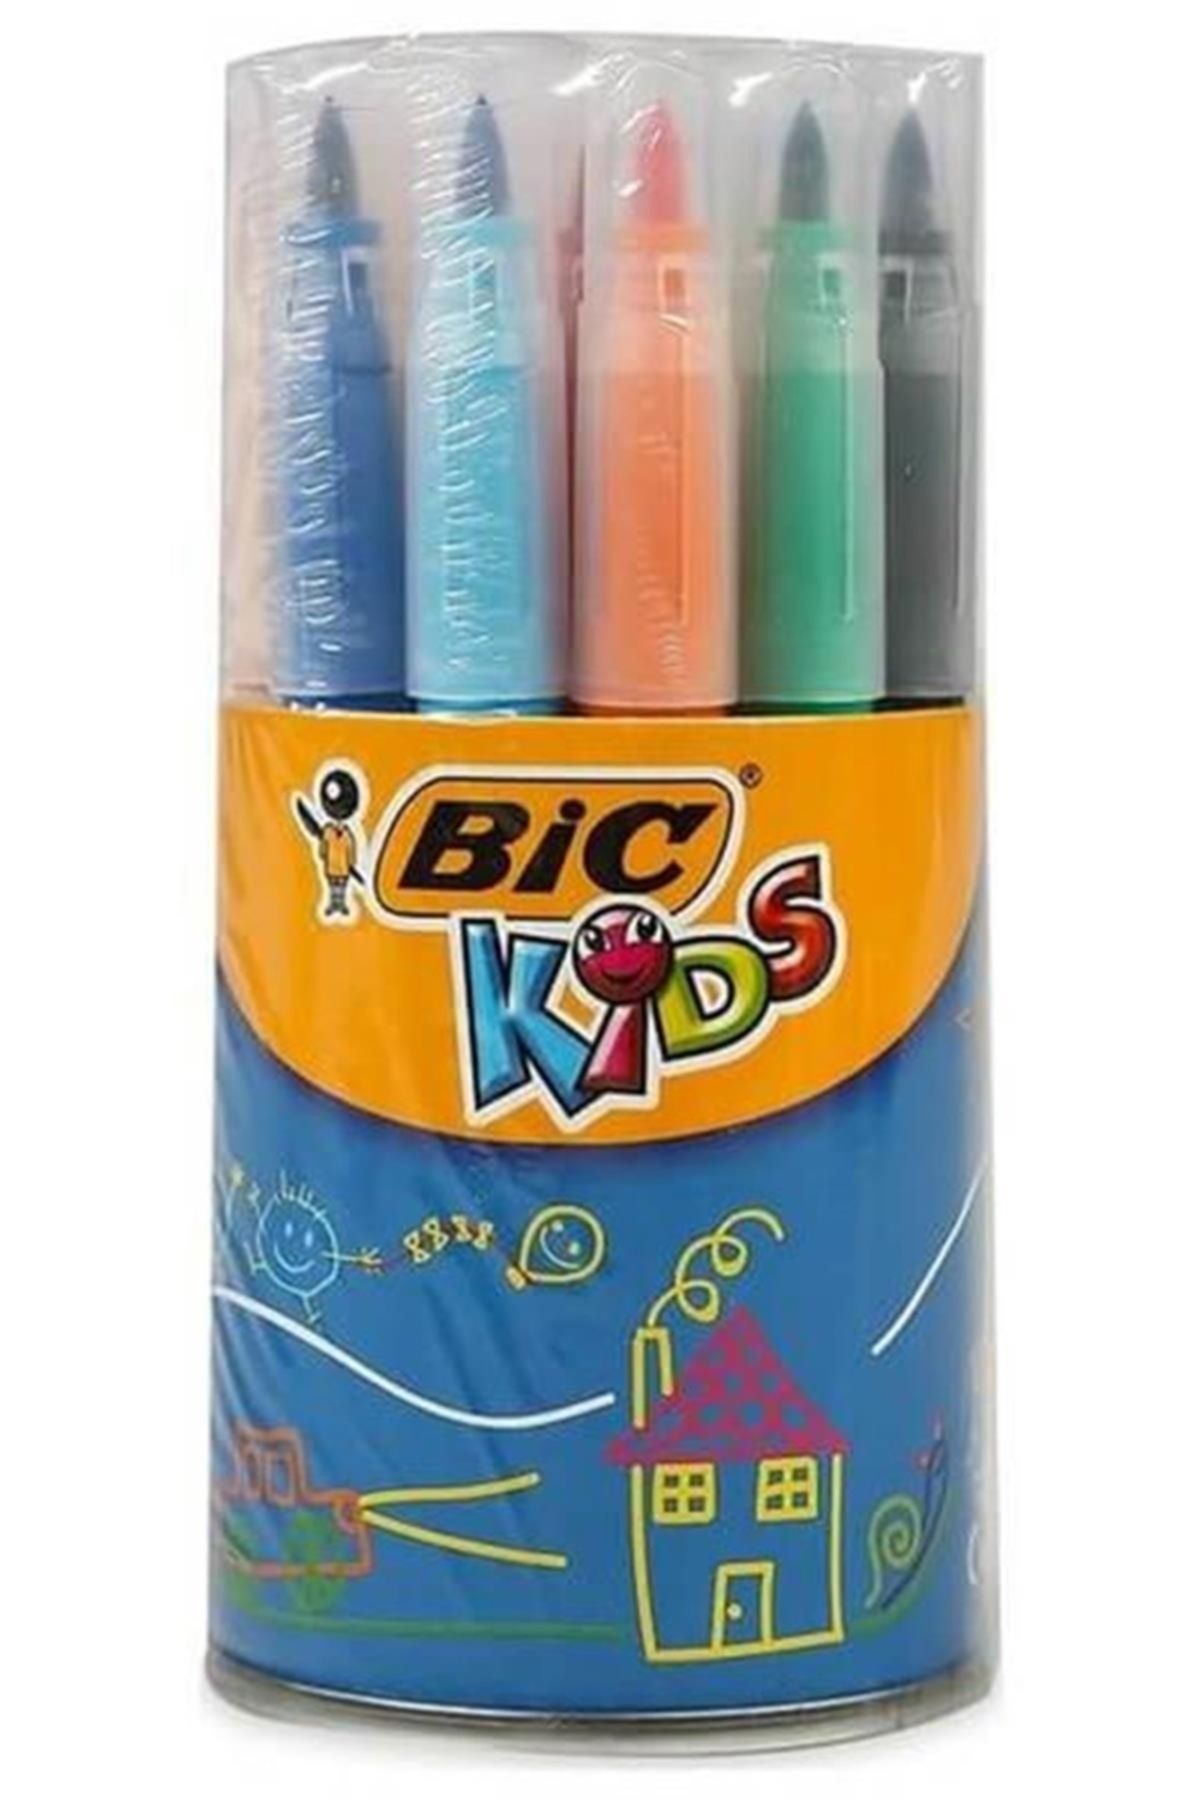 Bic Kids Vısa 18 Li Fırça Uçlu Keçeli Kalem 828965 Kategori: Kuru Boya Kalemi